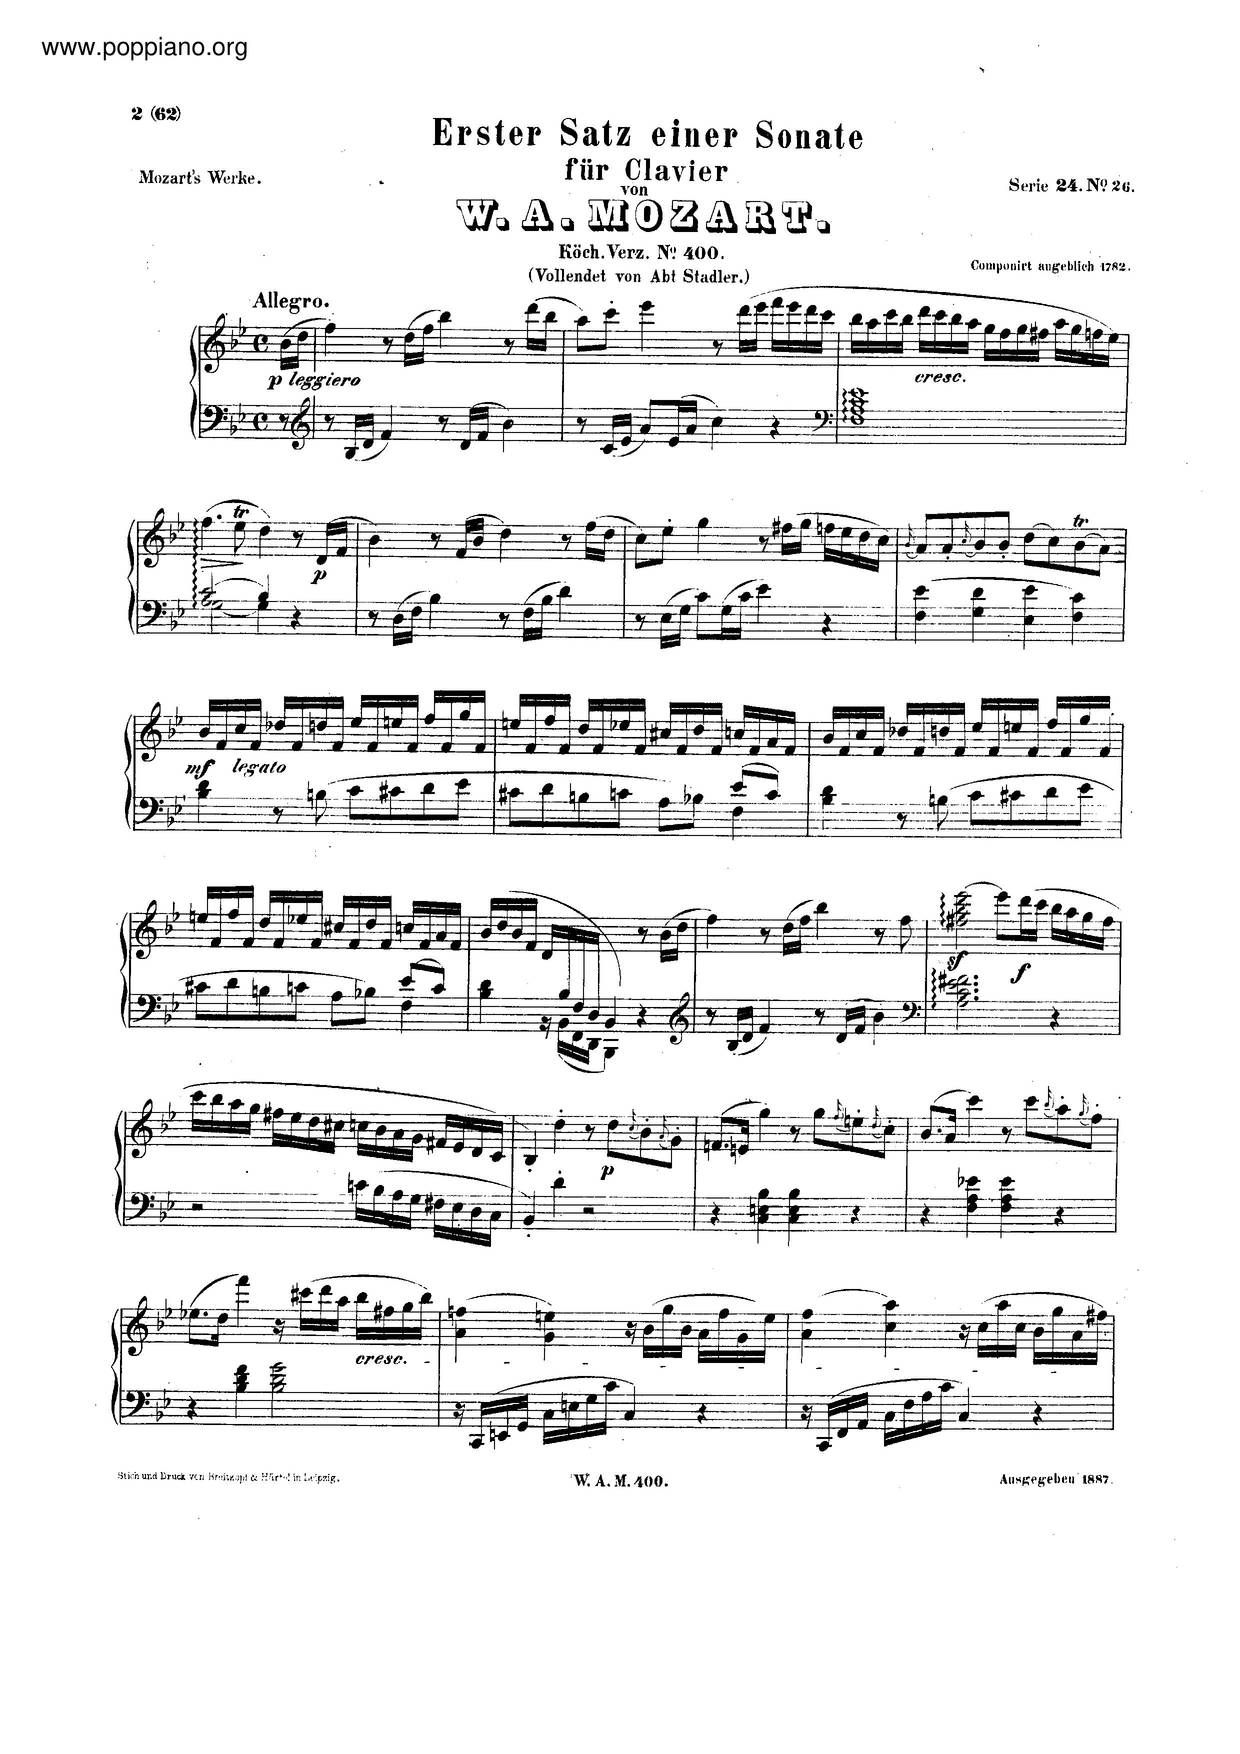 Allegro In B-Flat Major, K. 400/372A琴譜